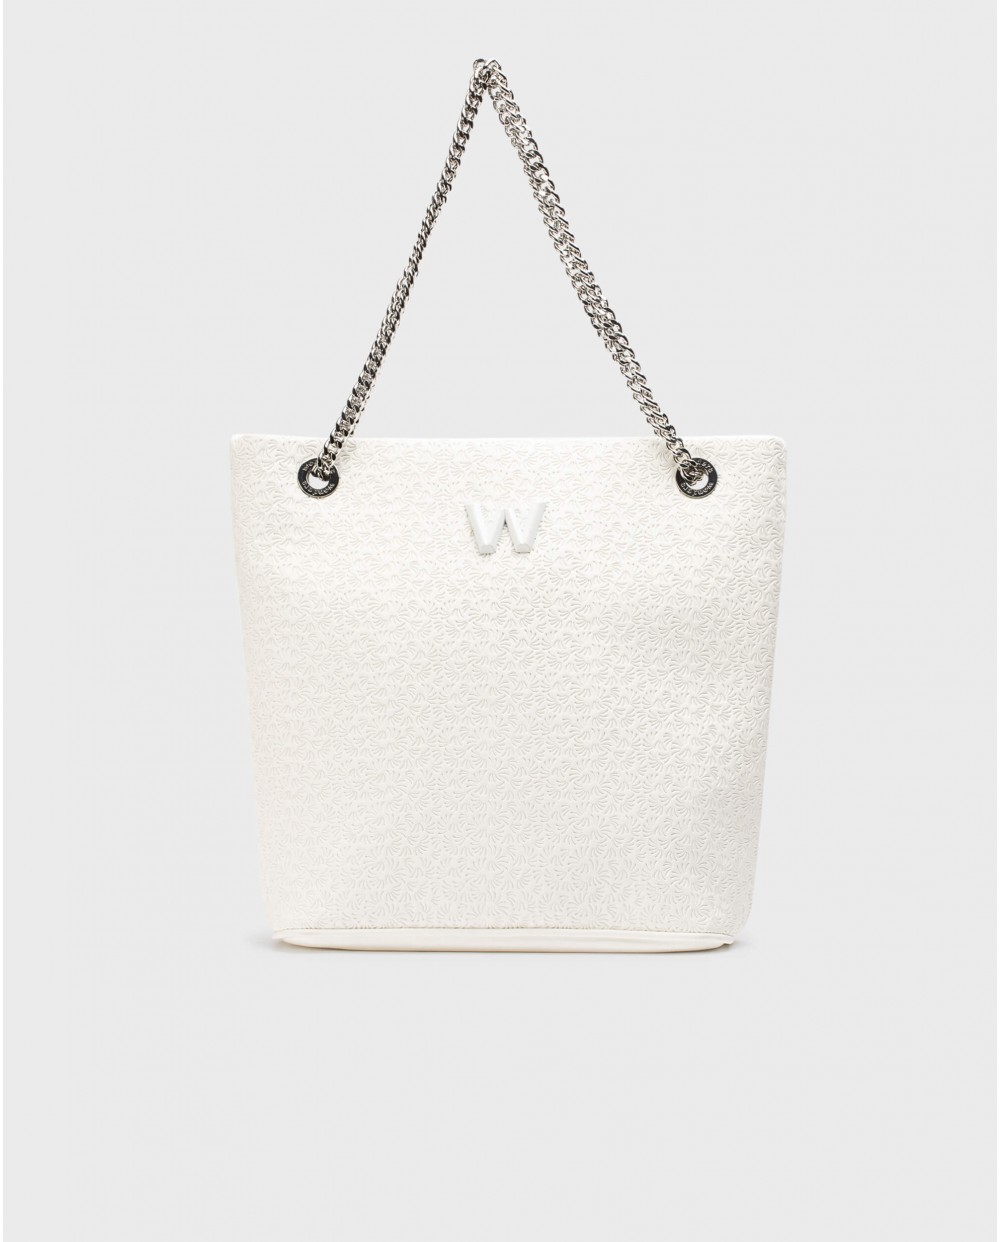 Wonders-Totes-White SERENA Bag